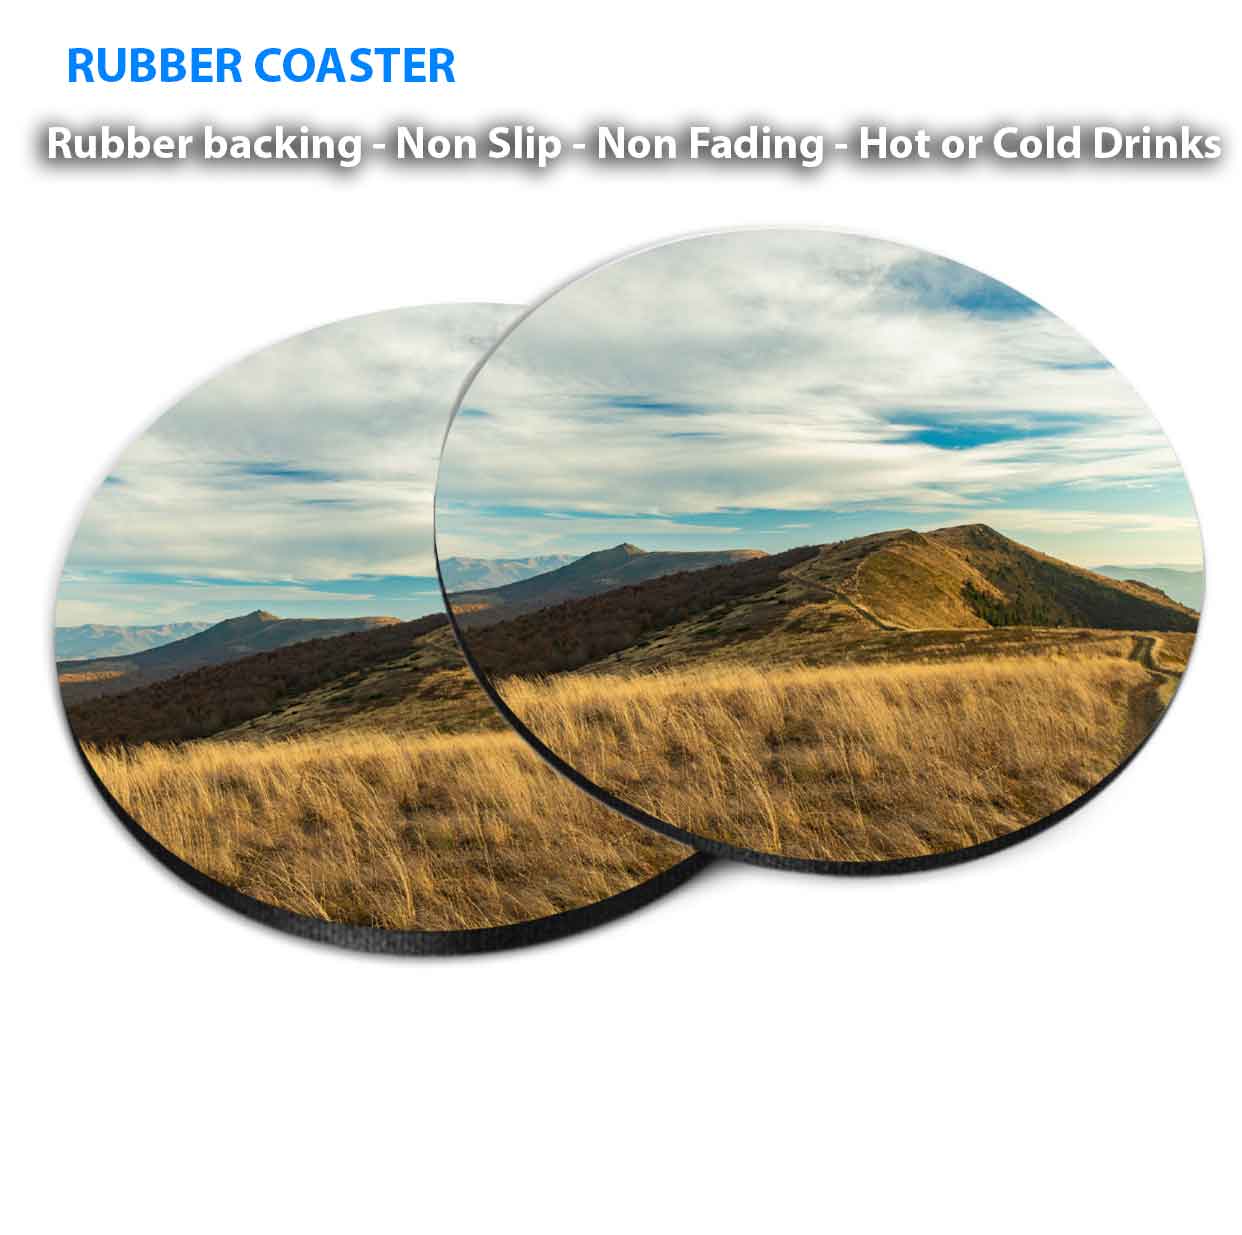 Highland Mountain Ridge Dirt Trail Coasters Wood & Rubber - Set of 6 Coasters